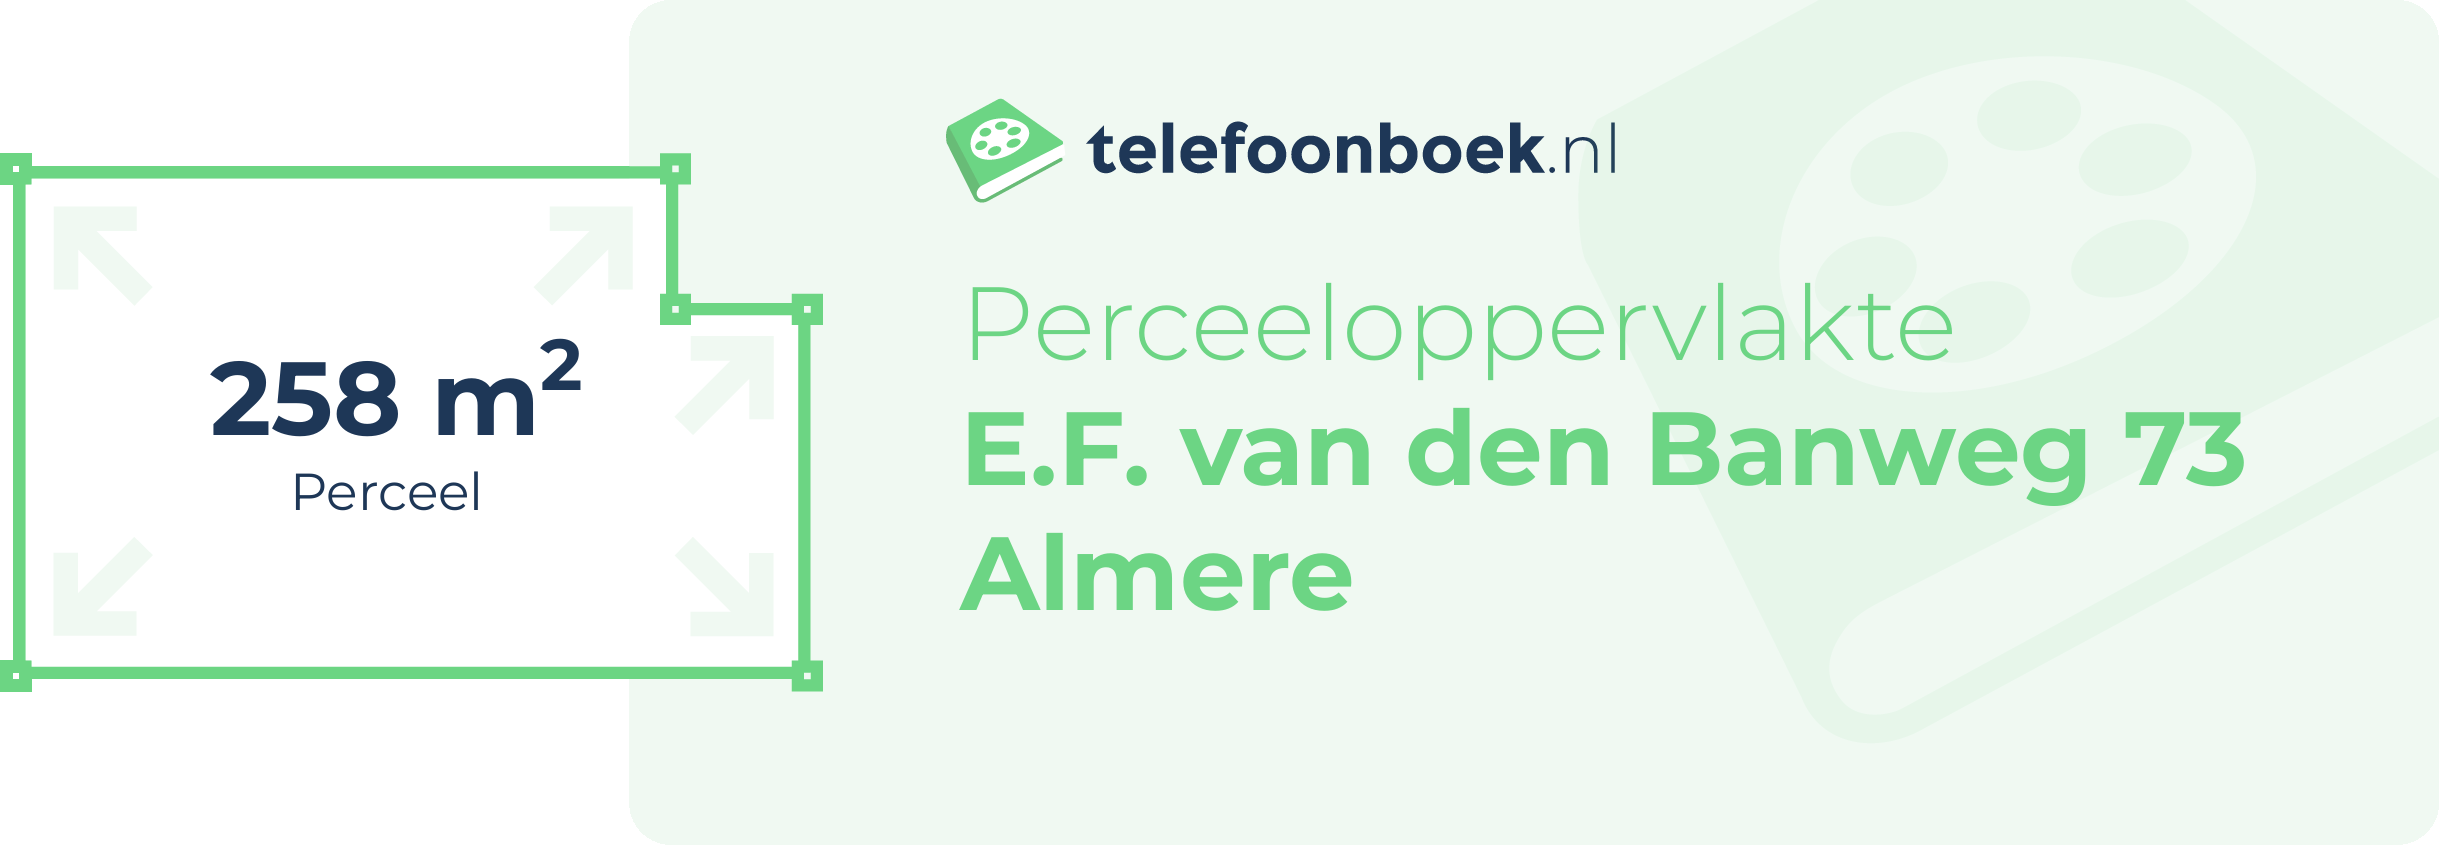 Perceeloppervlakte E.F. Van Den Banweg 73 Almere